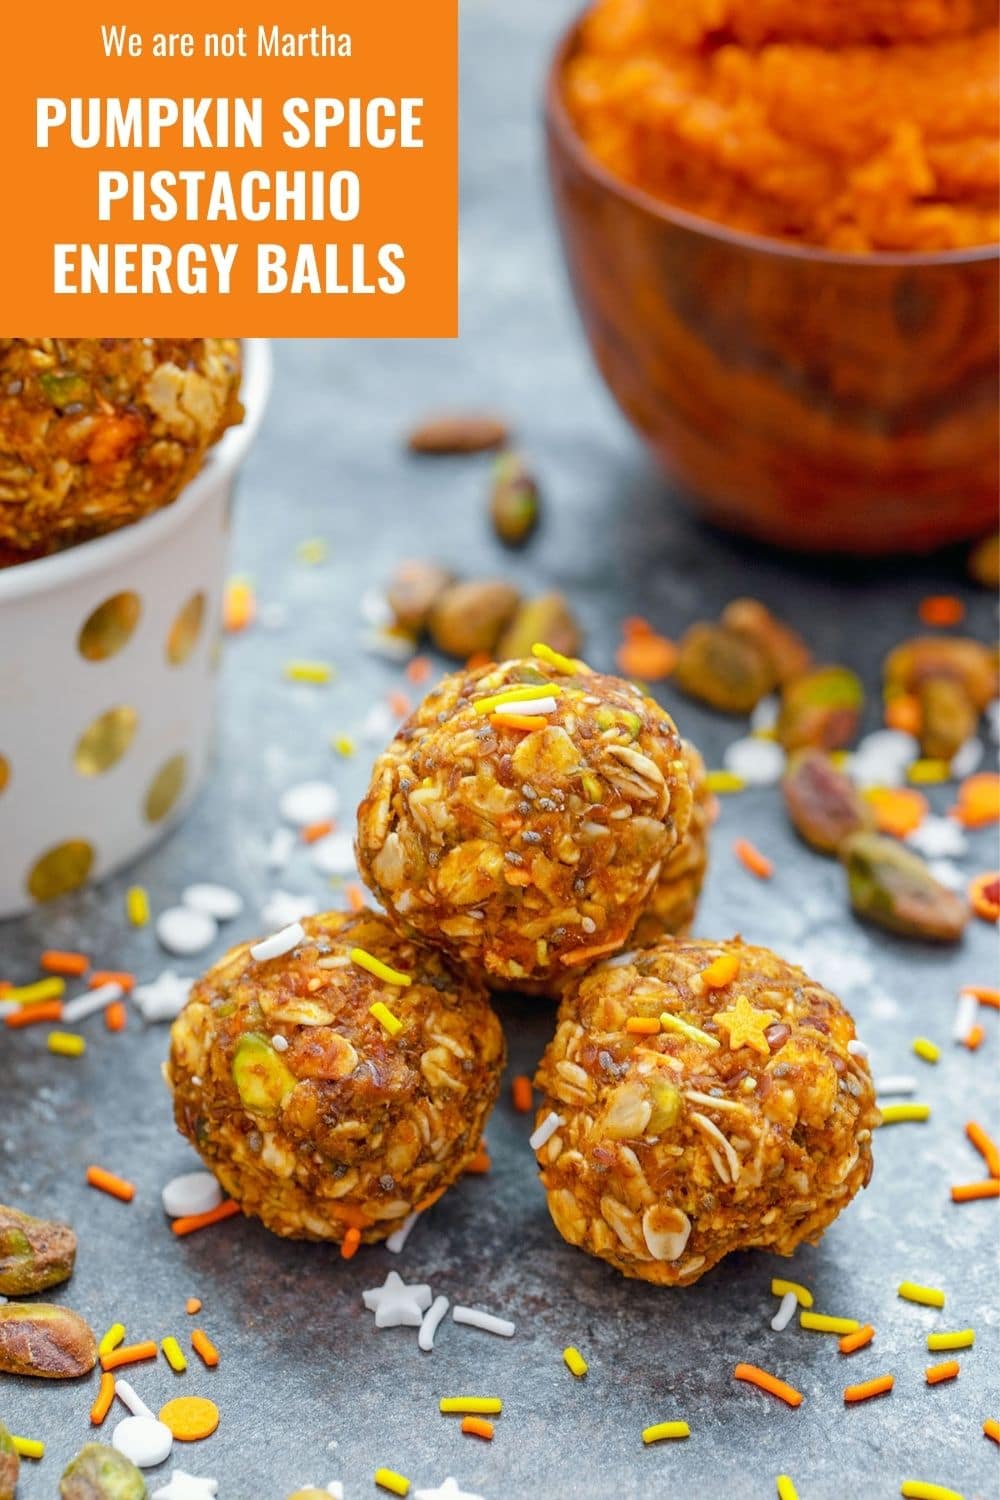 Pumpkin Spice Pistachio Energy Balls